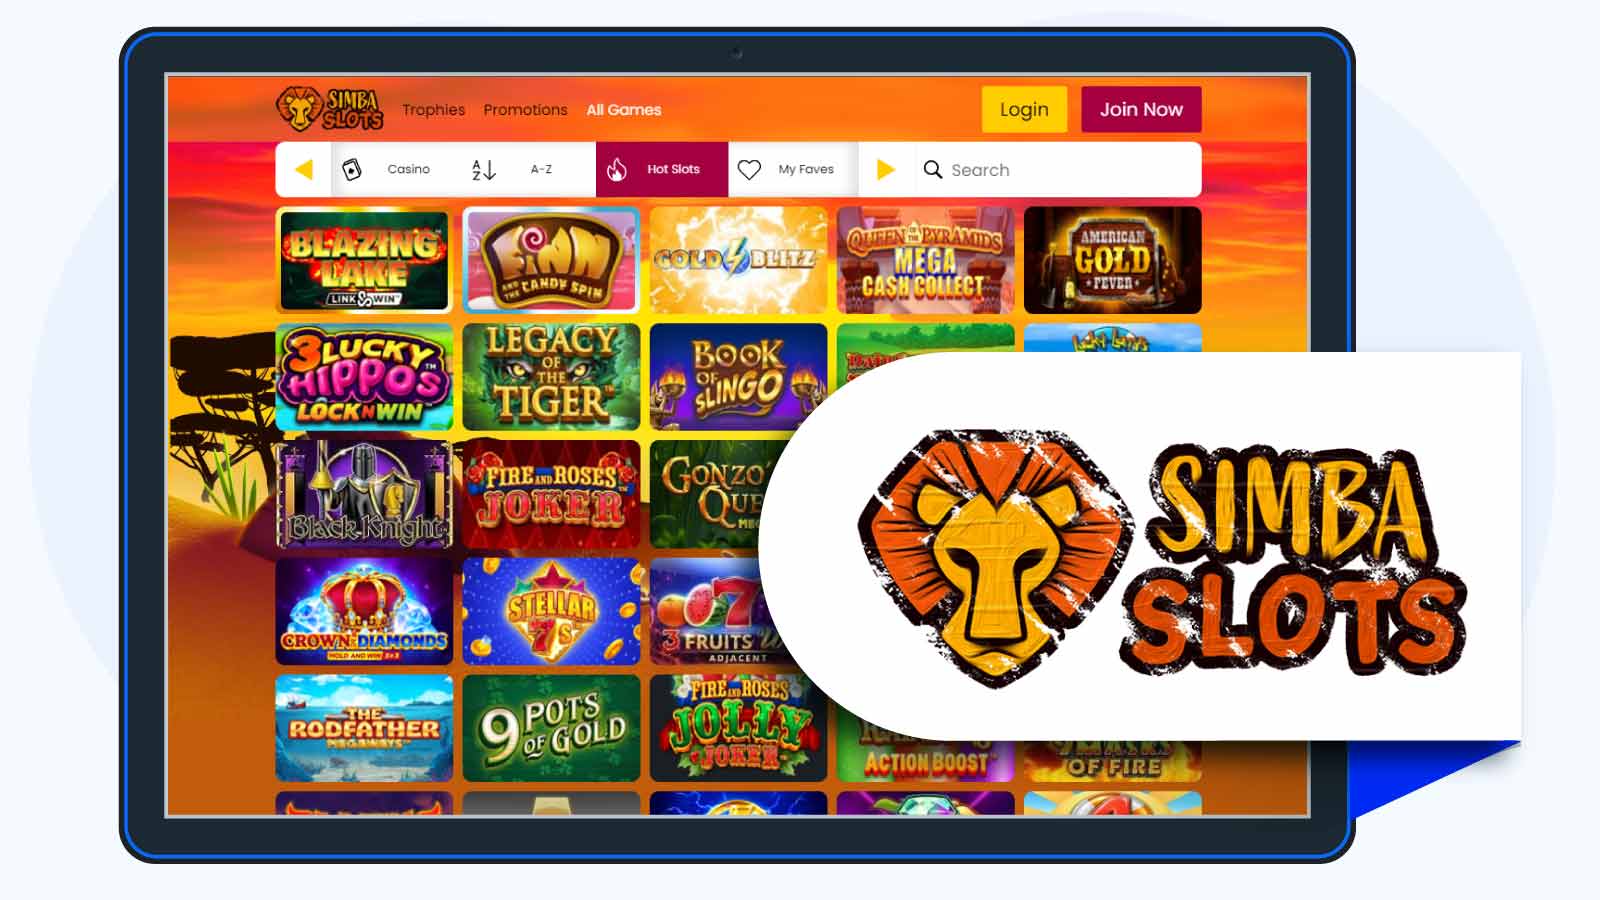 Simba Slots- 5 Free Spins No Deposit Needed